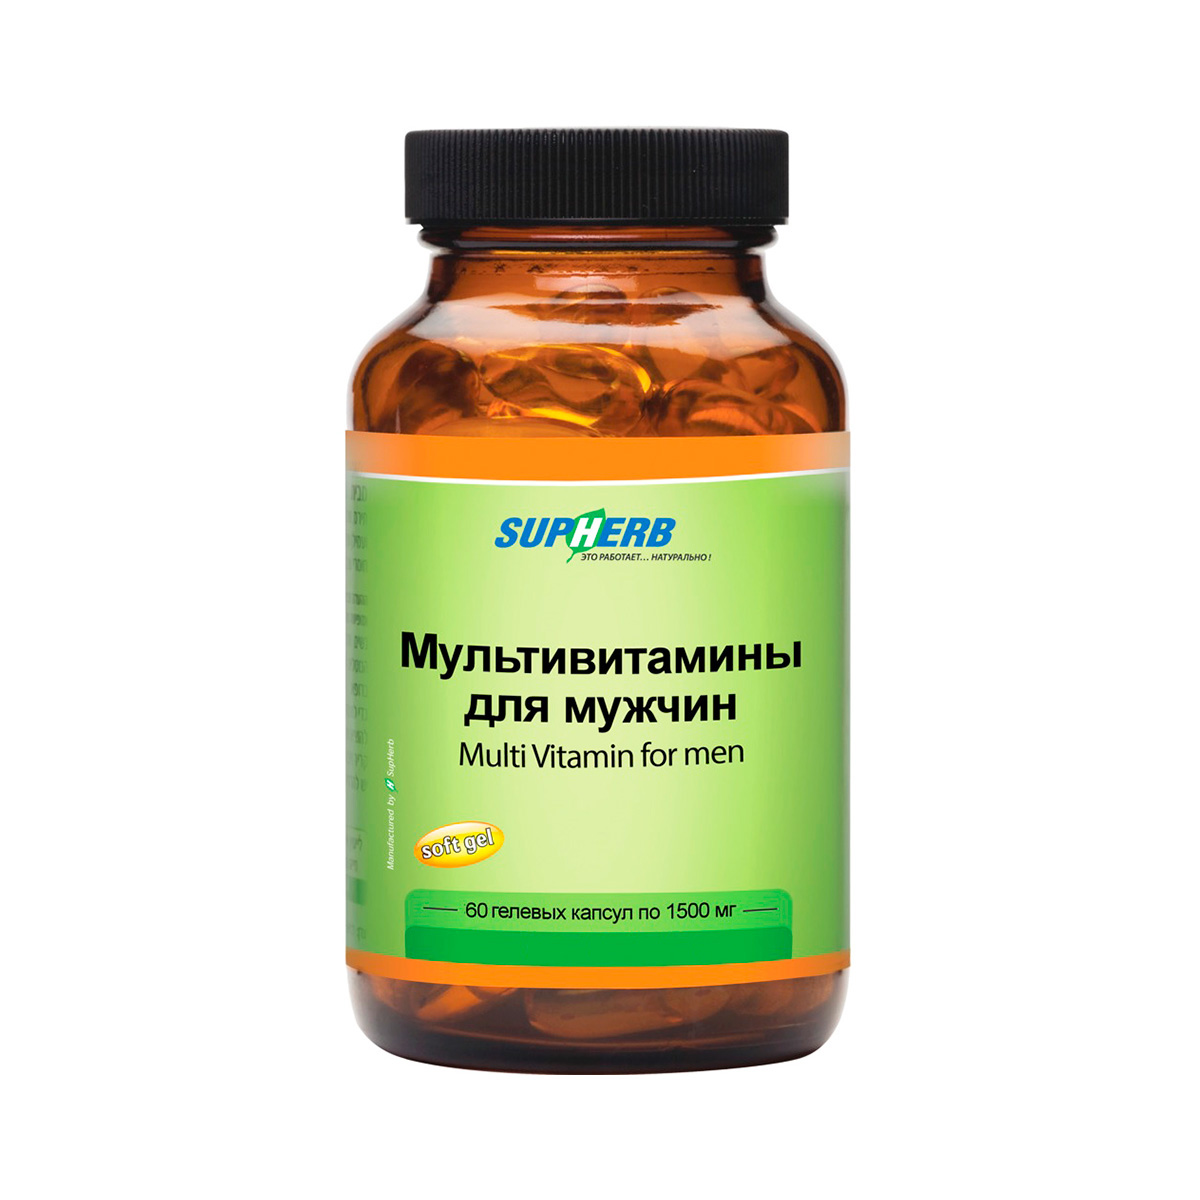 Мультивитамины для мужчин капсулы 1500 мг 60 шт SupHerb